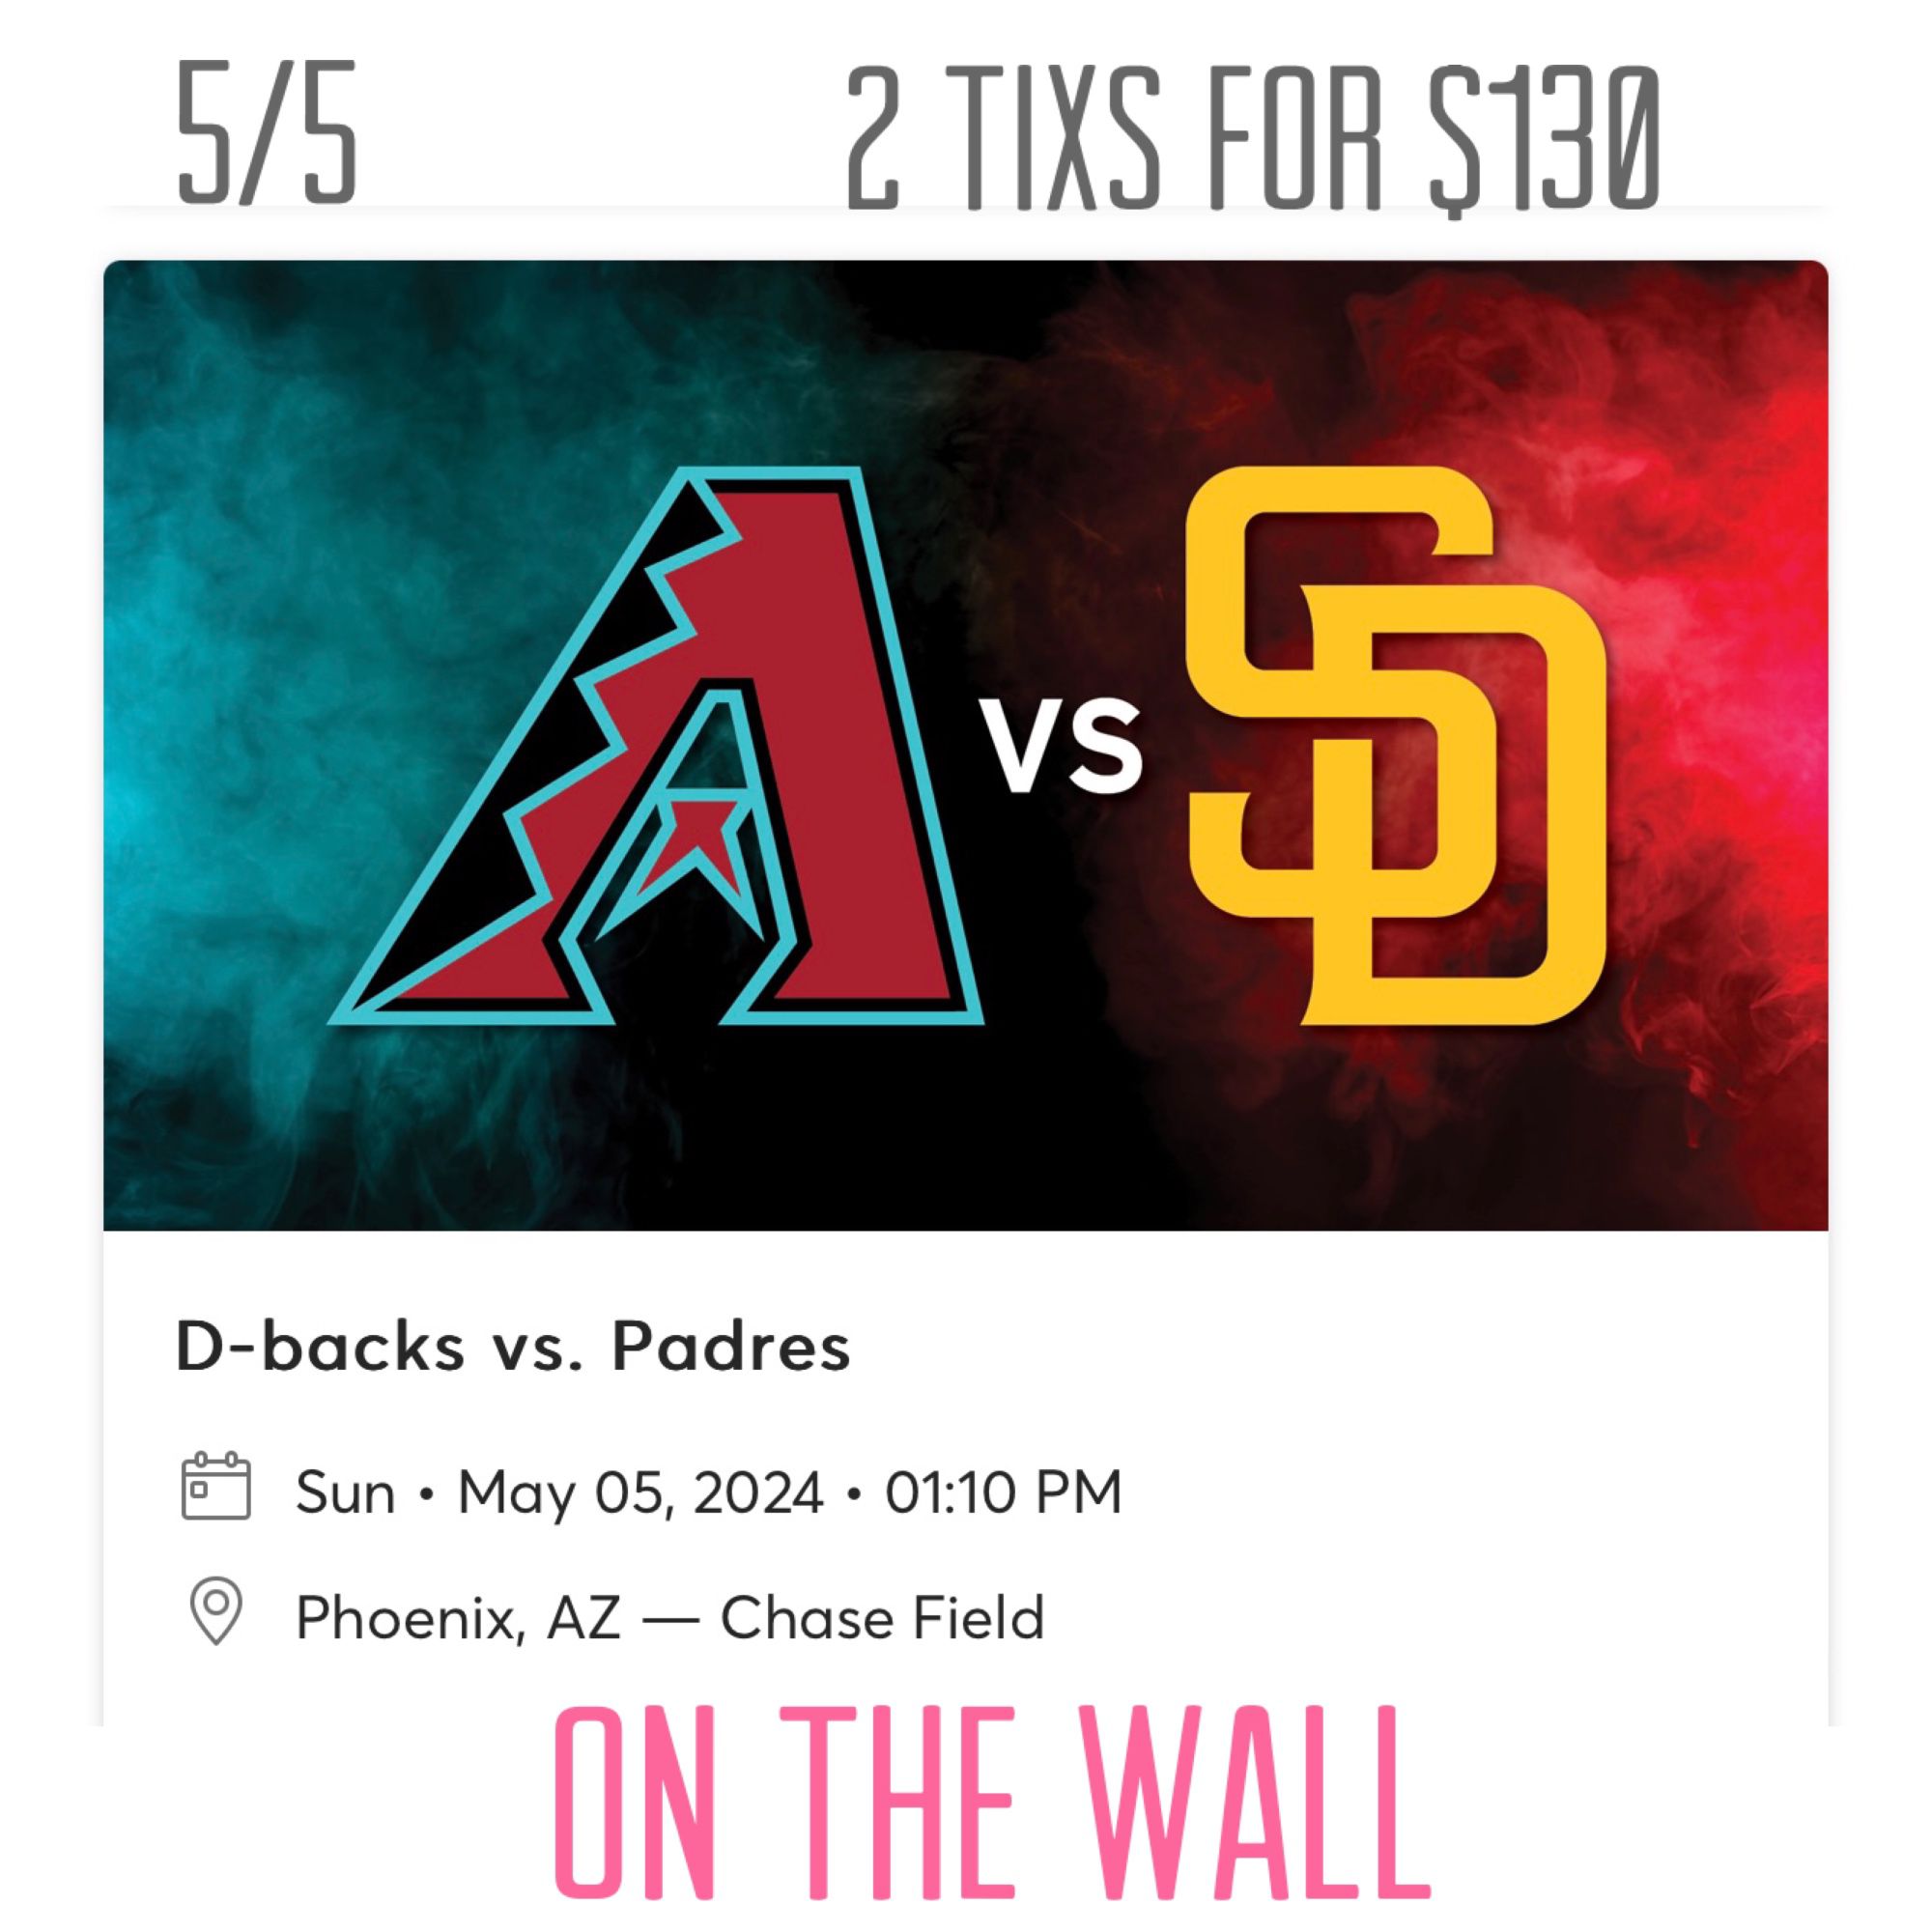 Arizona Diamondbacks Vs San Diego Padres 5/5 2 Tixs For $130